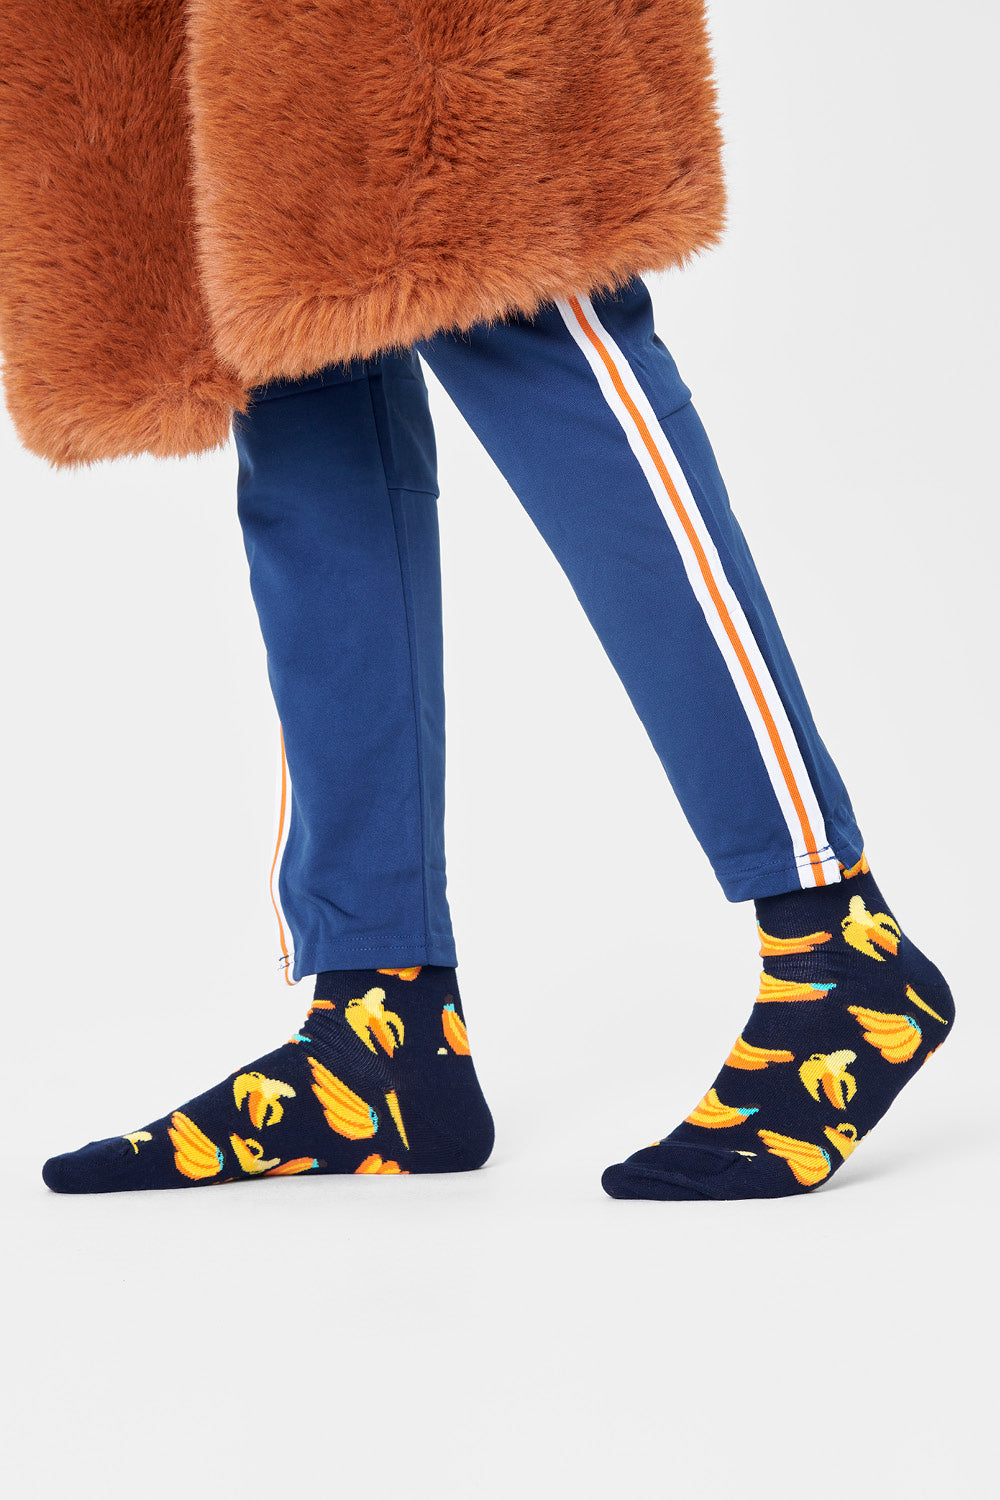 Happy Socks – Hoopers Stores